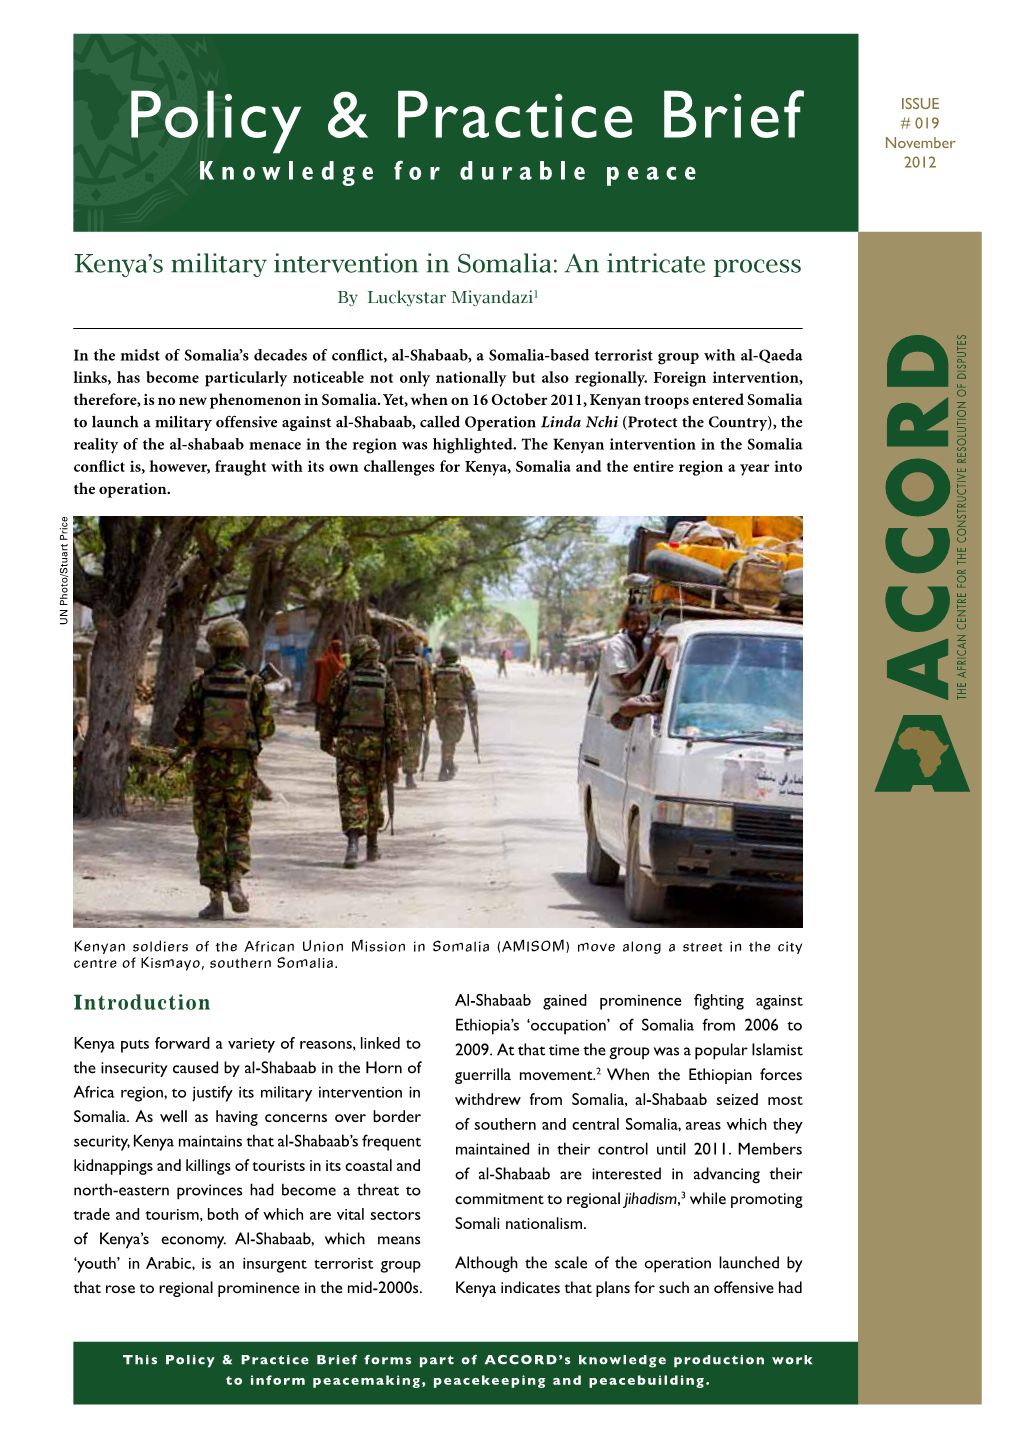 Kenya's Military Intervention in Somalia